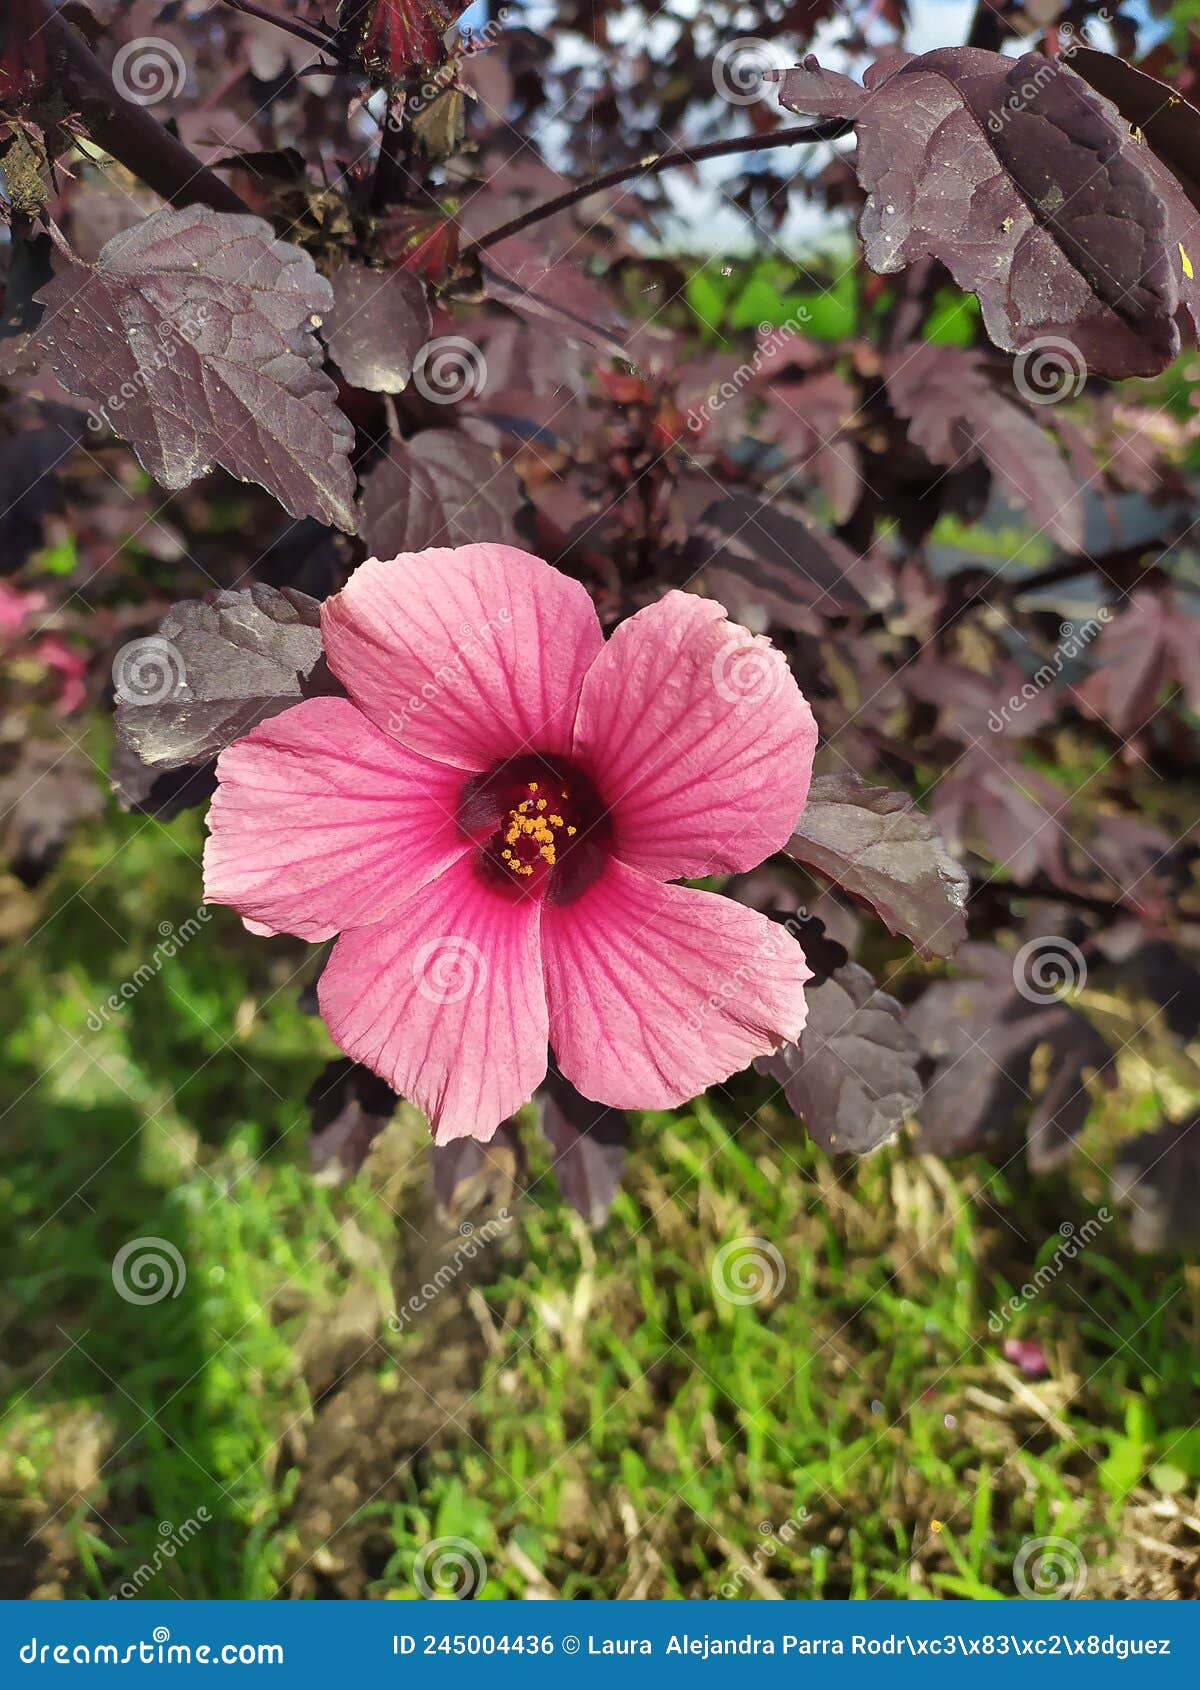 a single pink hawaiian hibiscus flower with purple leaves. una ÃÂºnica flor de cayena color rosado con hojas color morado